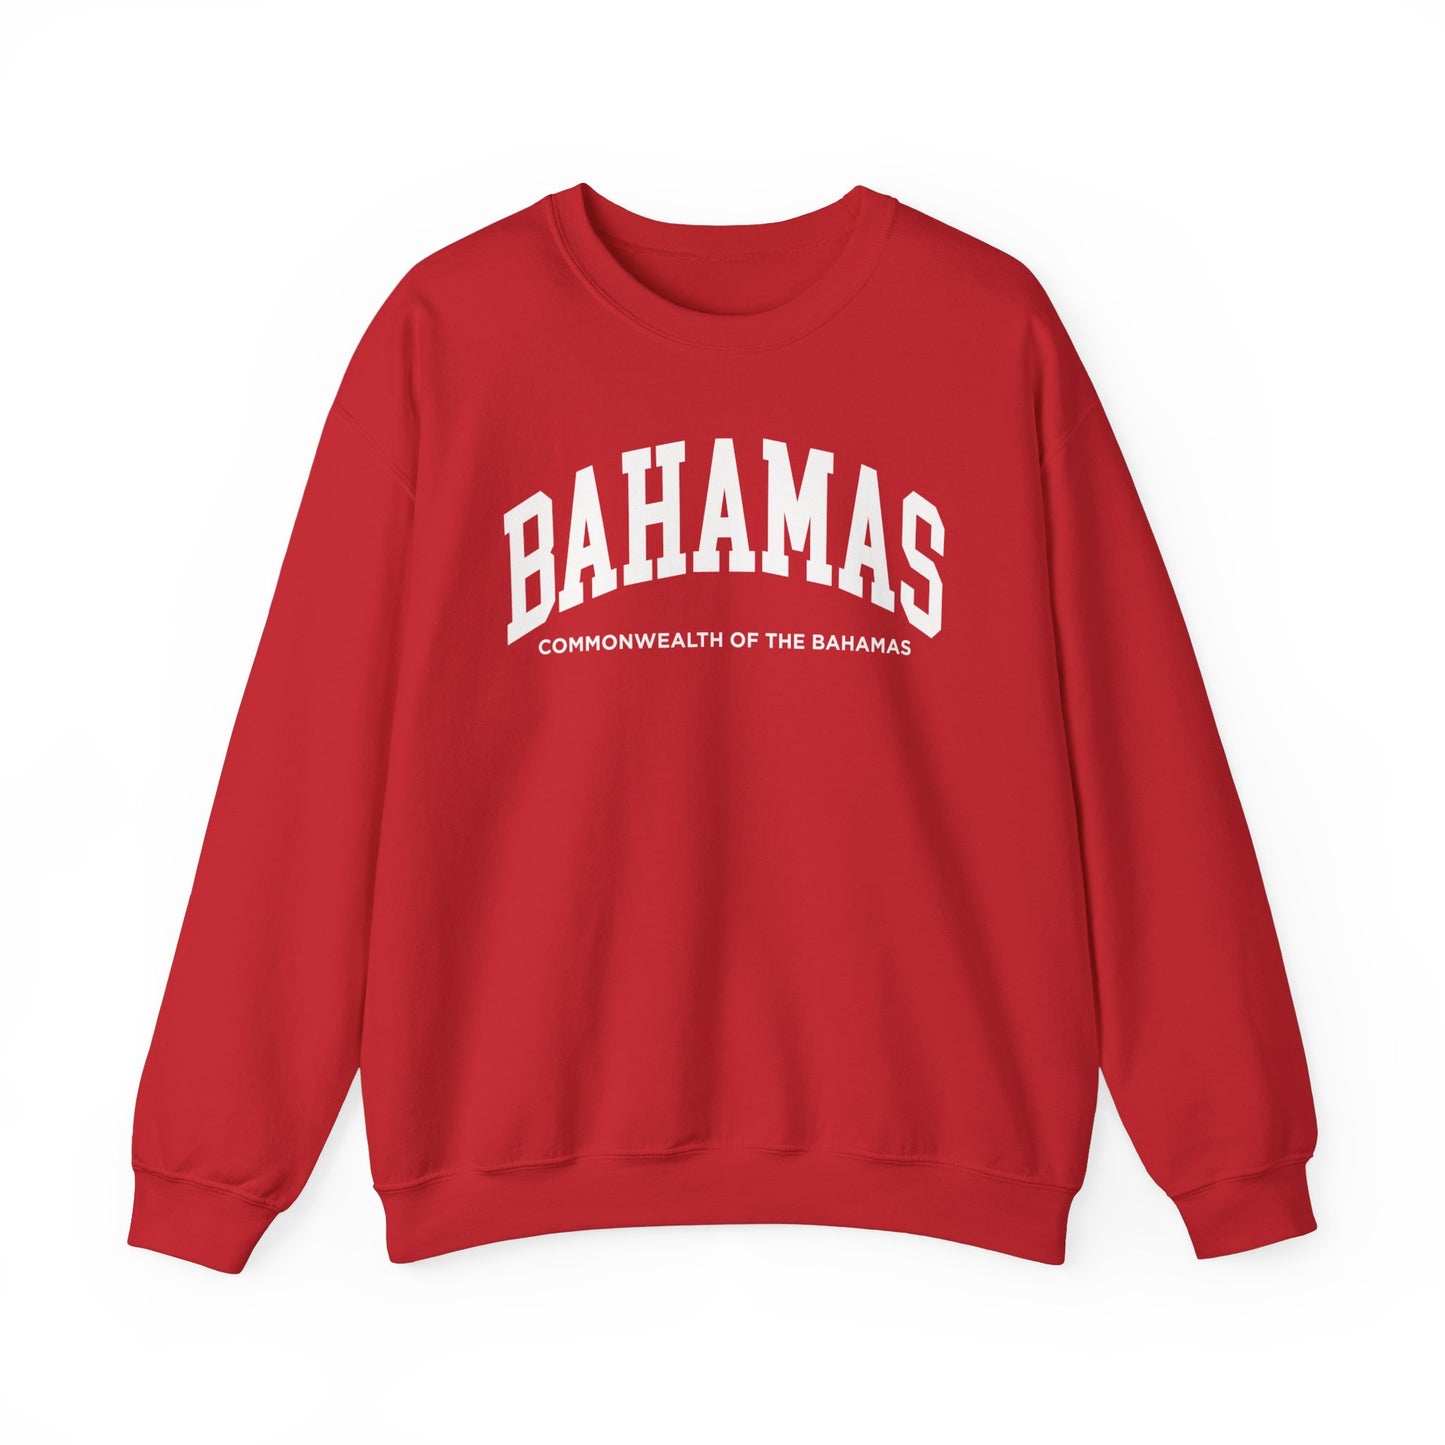 Bahamas Sweatshirt